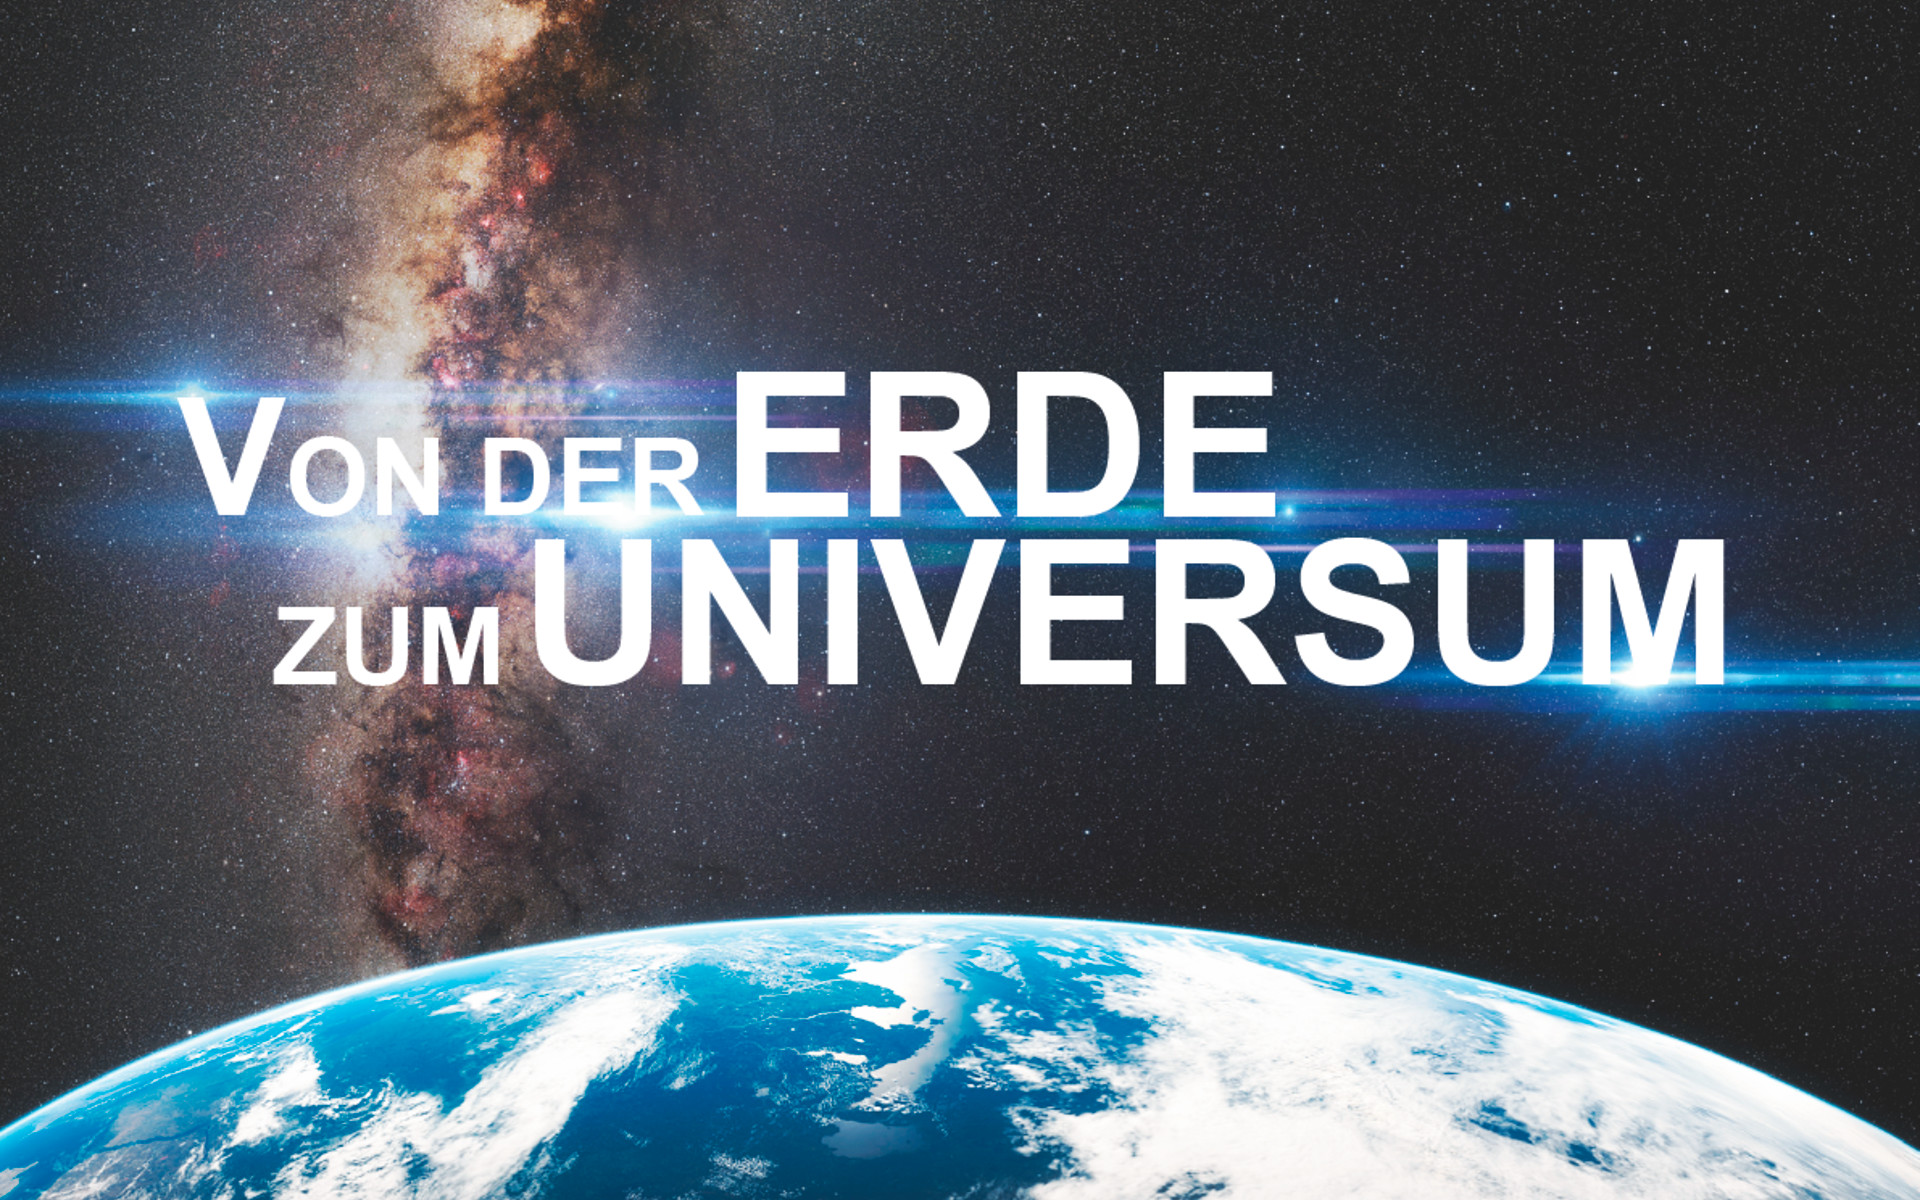 Key Visual For The Planetarium Show Von Der Erde Sum - Earth To The Universe Planetarium Show - HD Wallpaper 